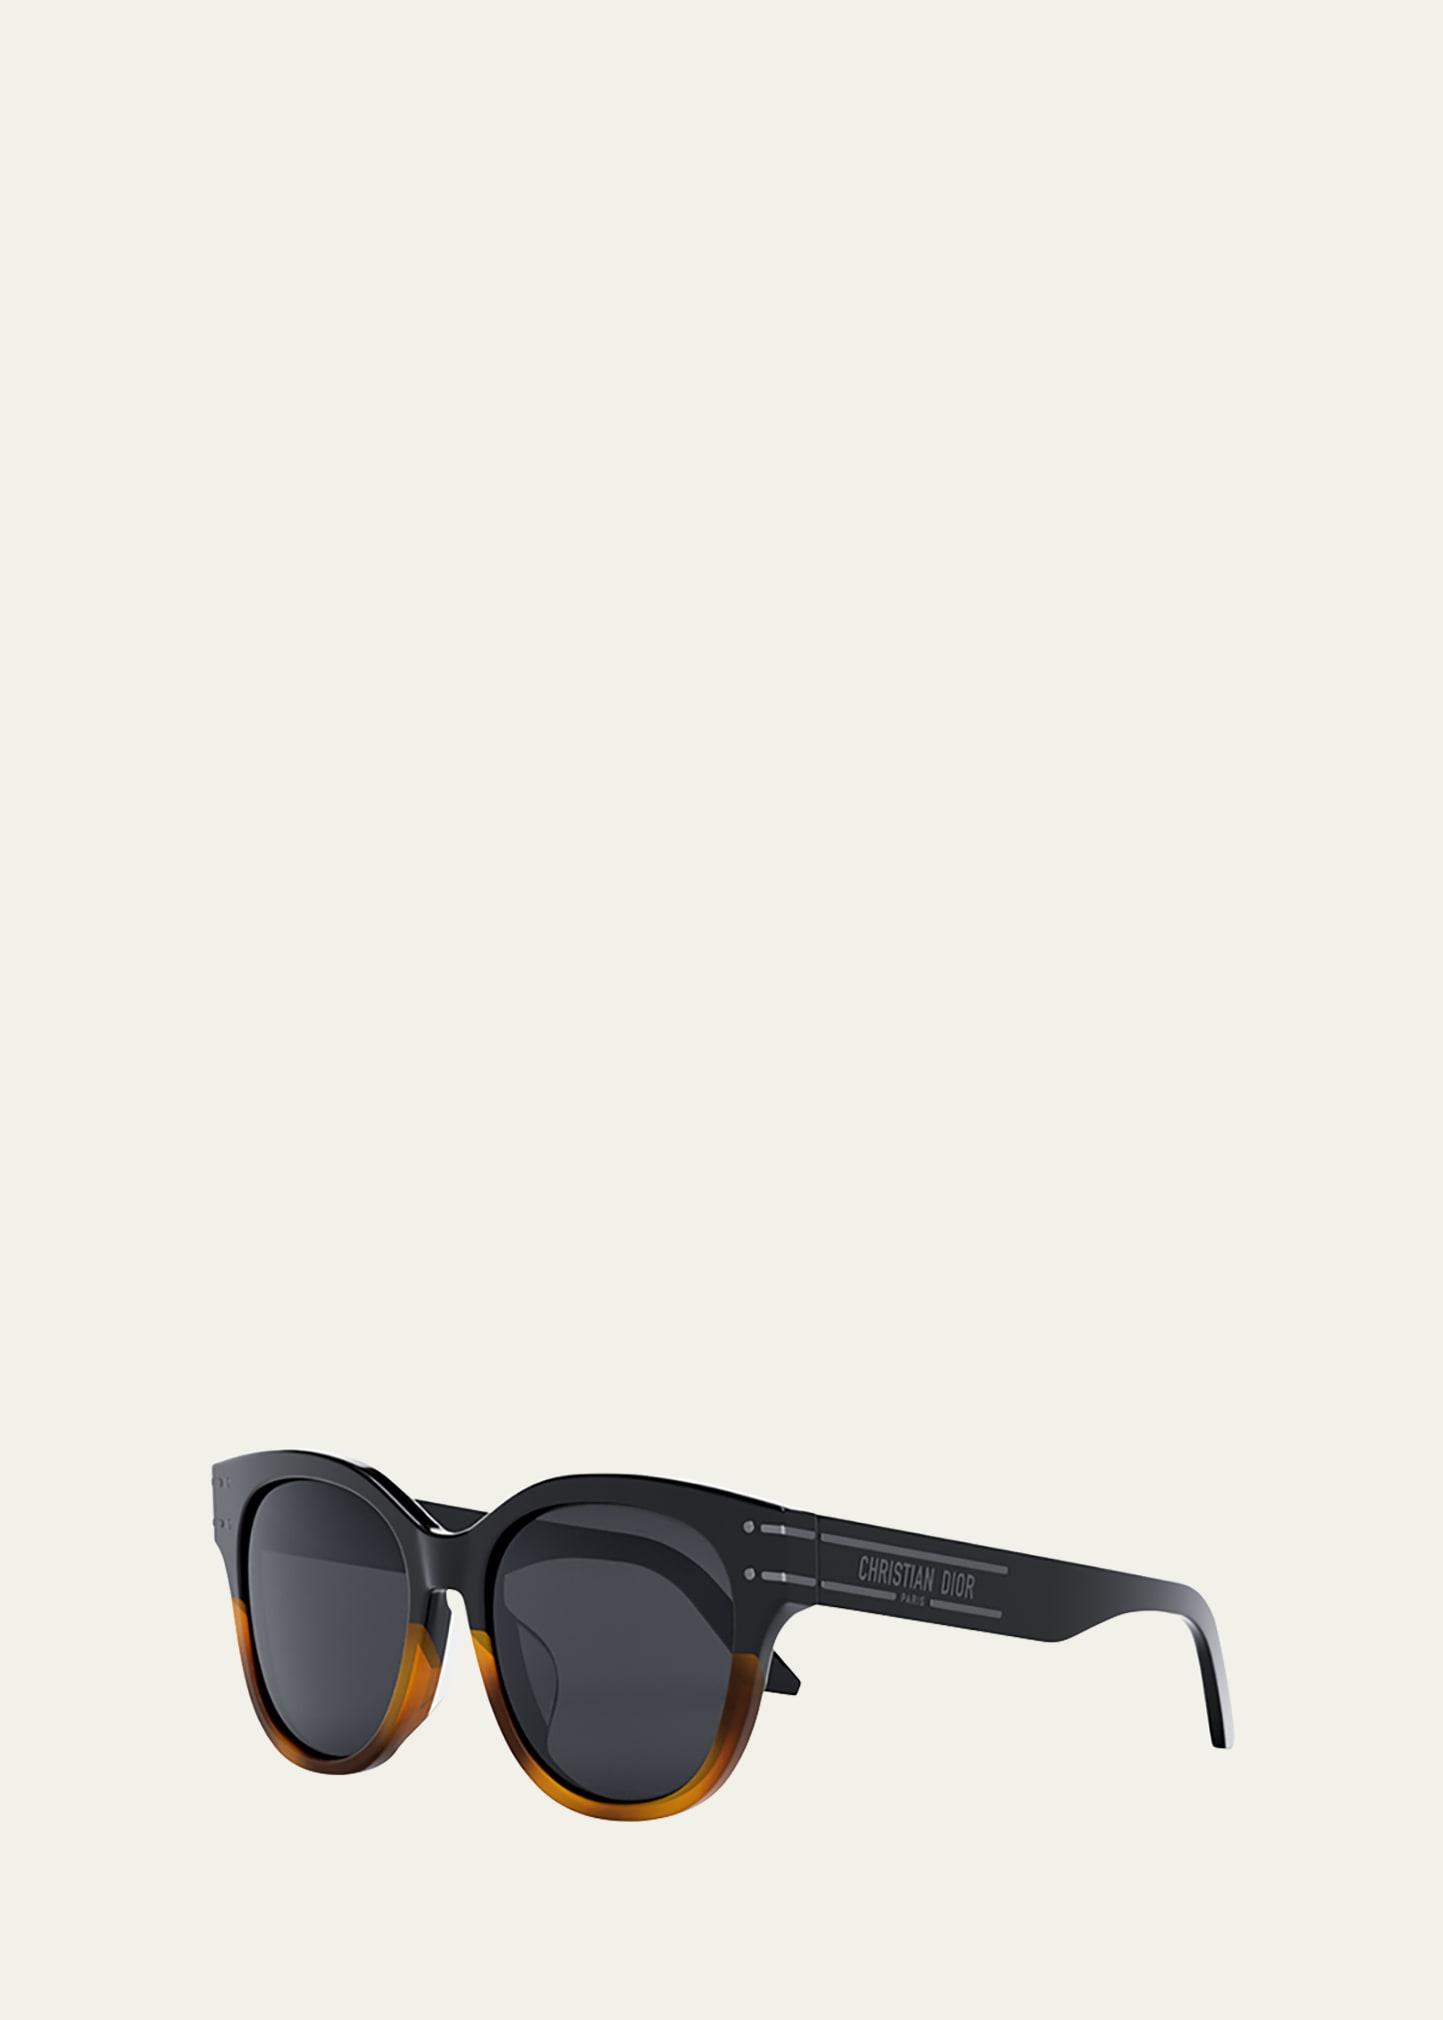 Dior Signature B6f Sunglasses